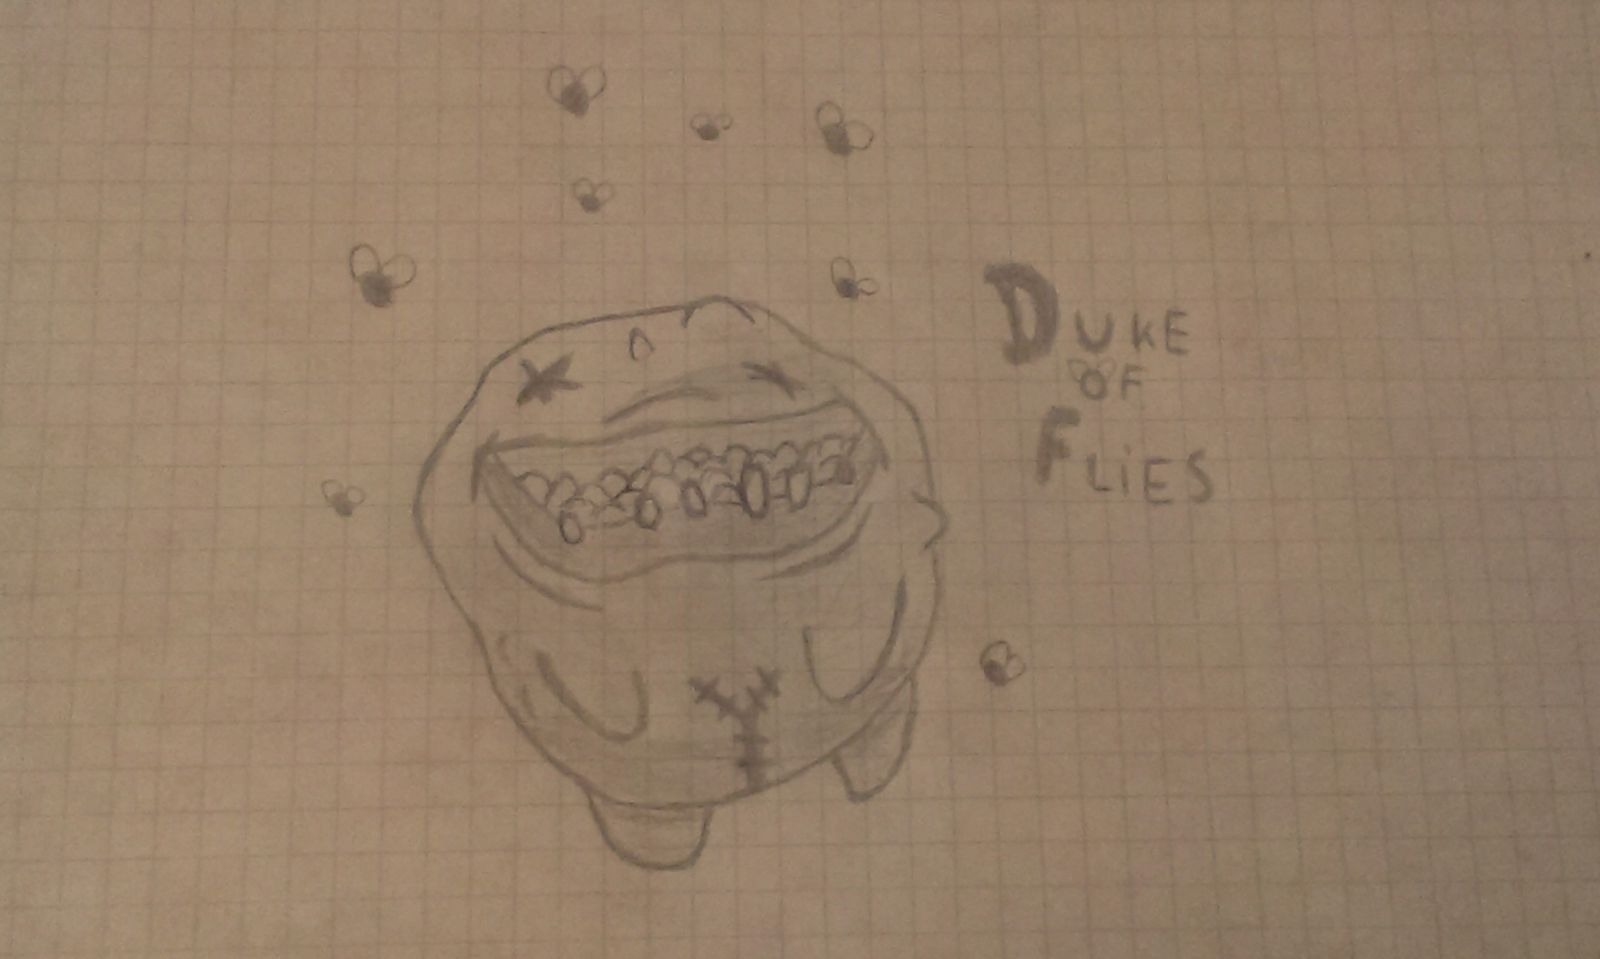 Duke of Flies